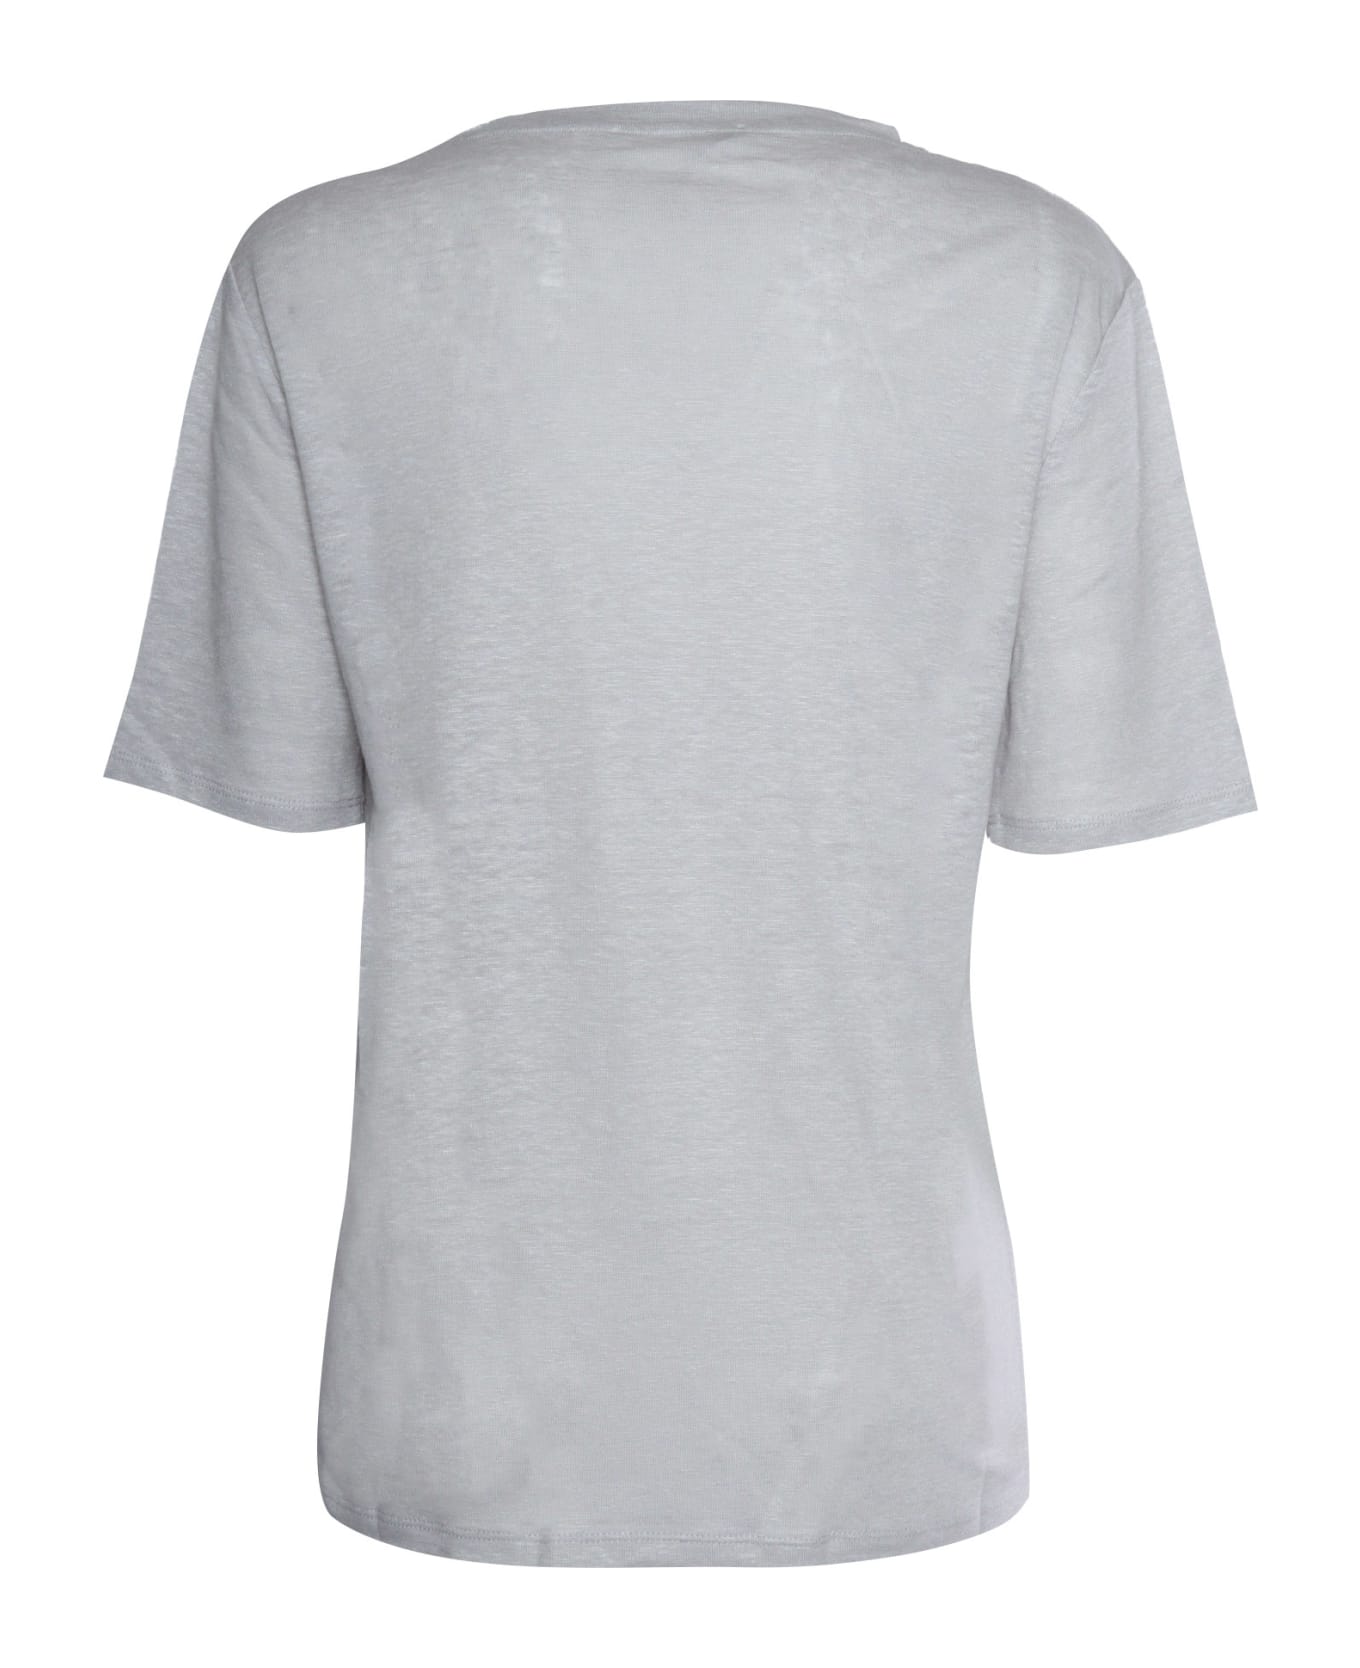 Kangra Grey T-shirt - GREY